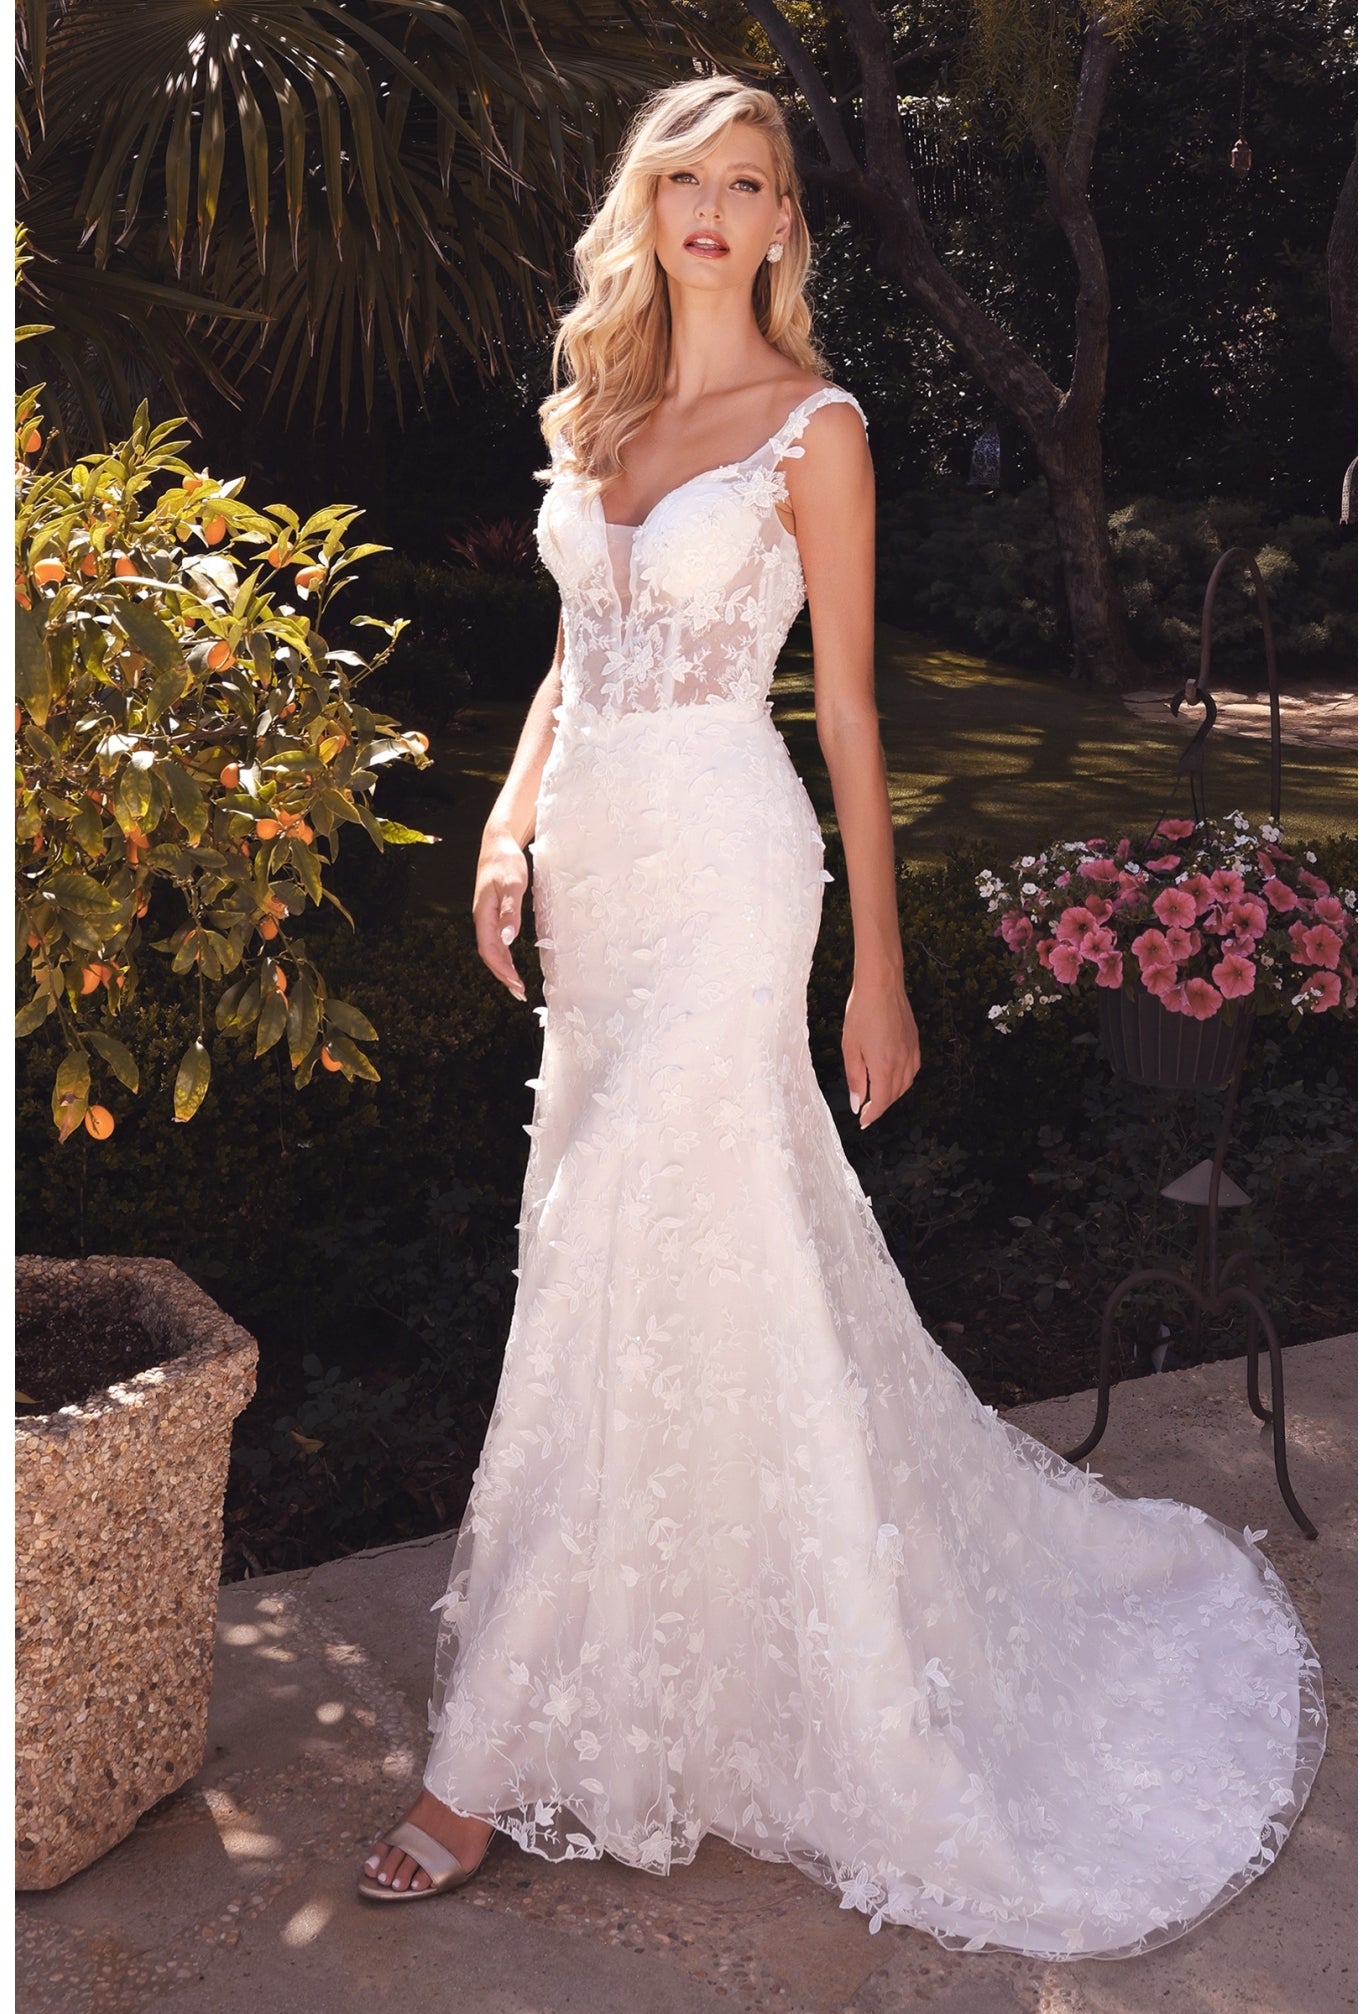 Knoxville Vestido De Novia  Lace & Glam Bridal Boutique